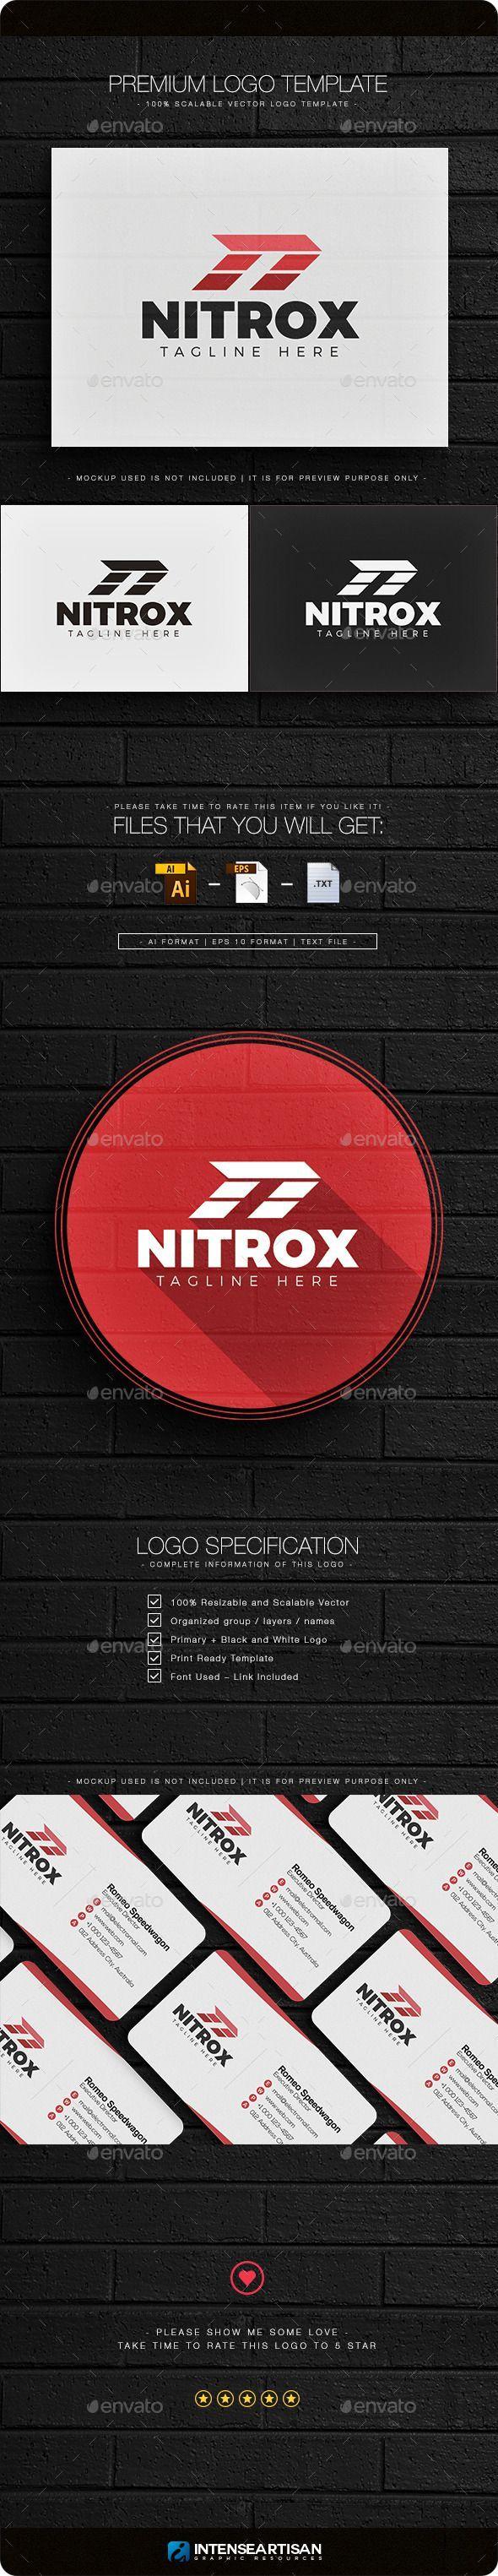 Only with Red N Logo - Nitrox N Logo. Fonts Logos Icons. Logo Templates, Logos